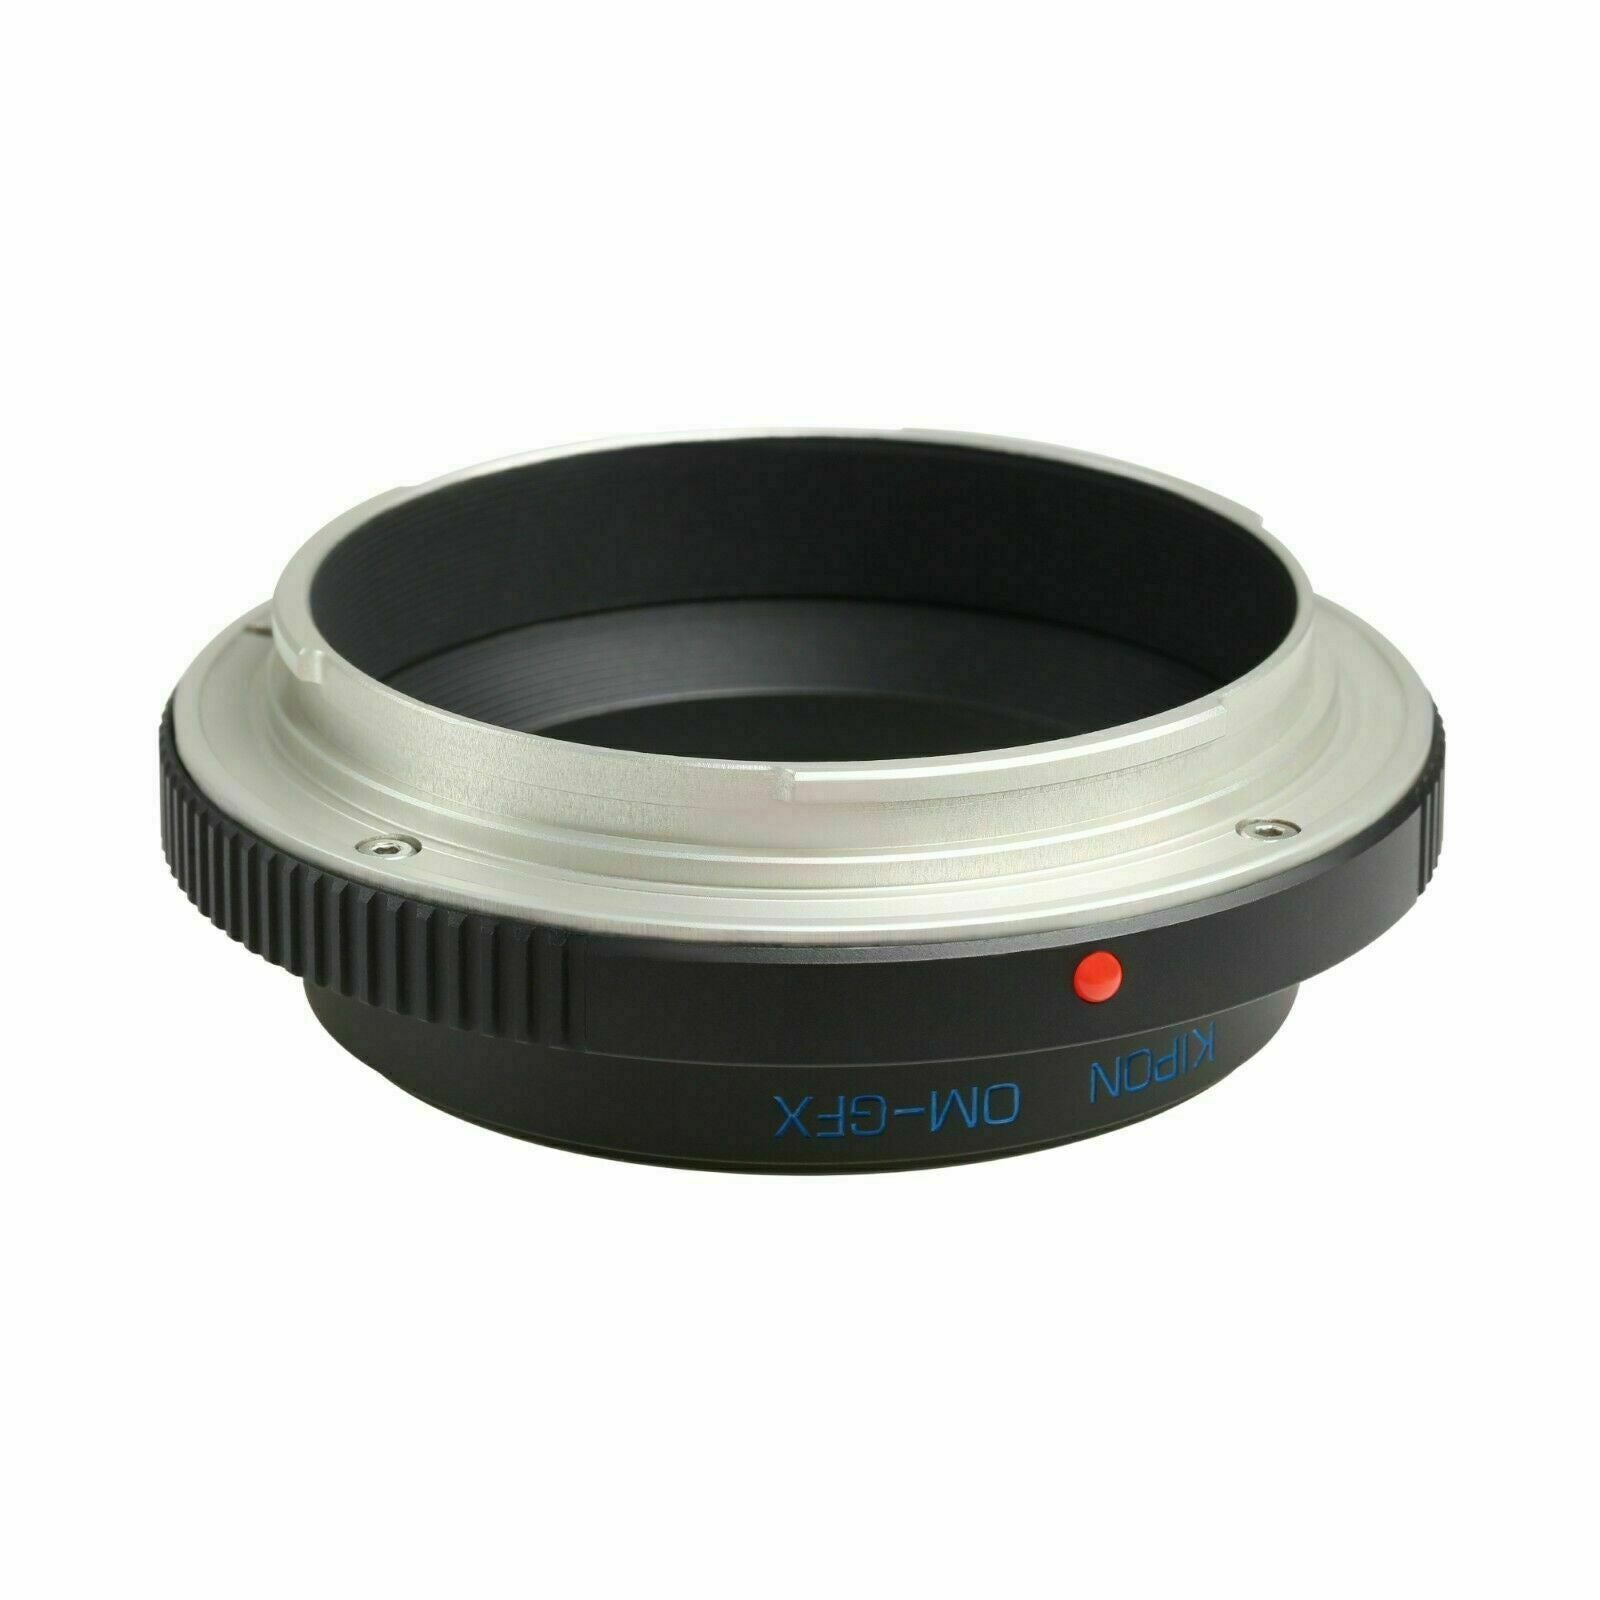 Kipon OM-GFX lens adapter for Olympus OM mount lens to Fujifilm G-Mount Fuji GFX medium format mirrorless camera Pro Adapter - GFX 50S 100S